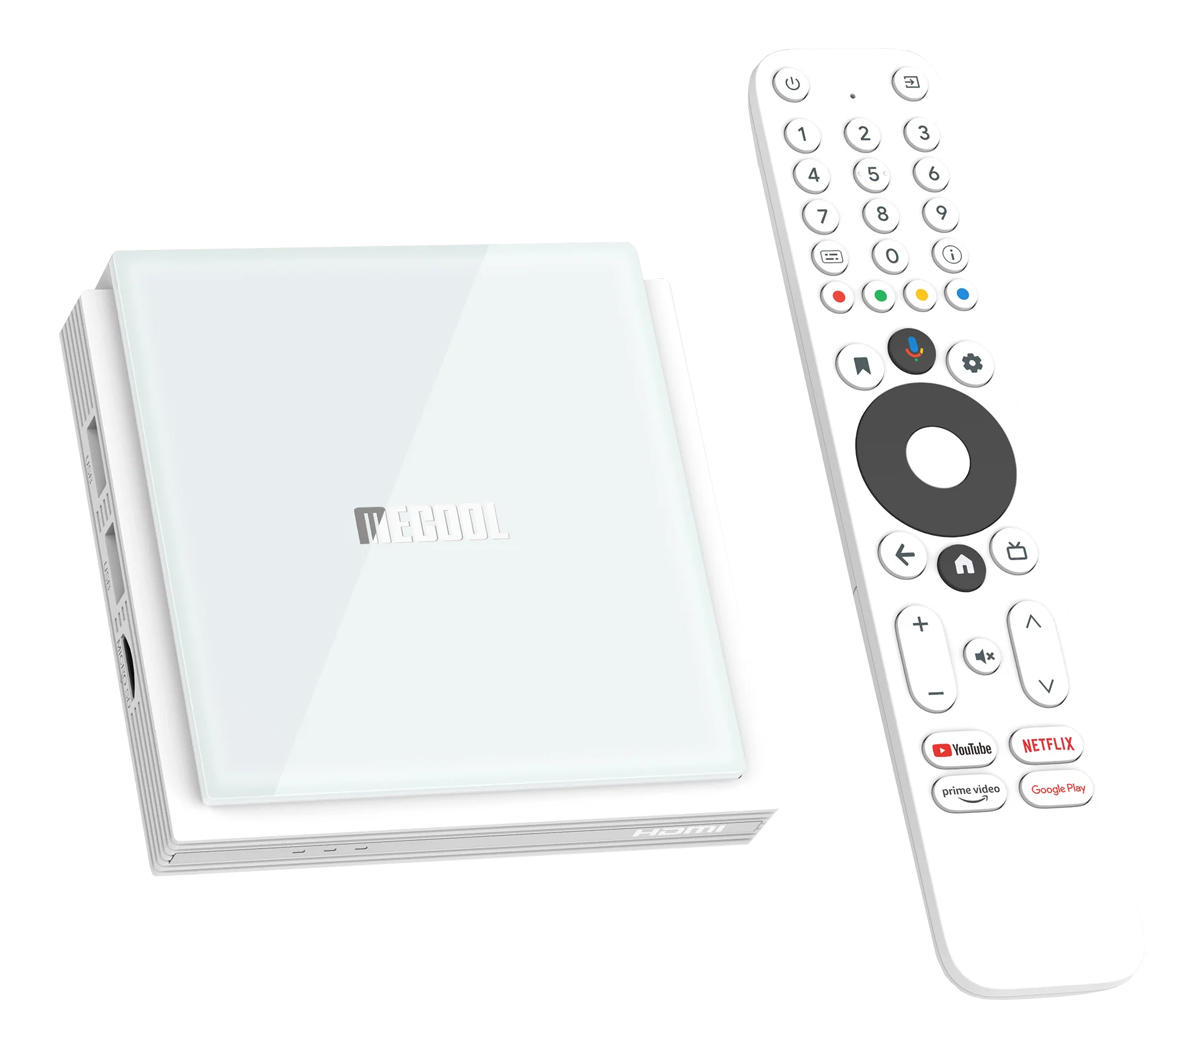 MECOOL TV Box KM2 Plus Deluxe, Google πιστοποίηση, 4K, WiFi, Android 11 -κωδικός MCL-KM2PLUSD